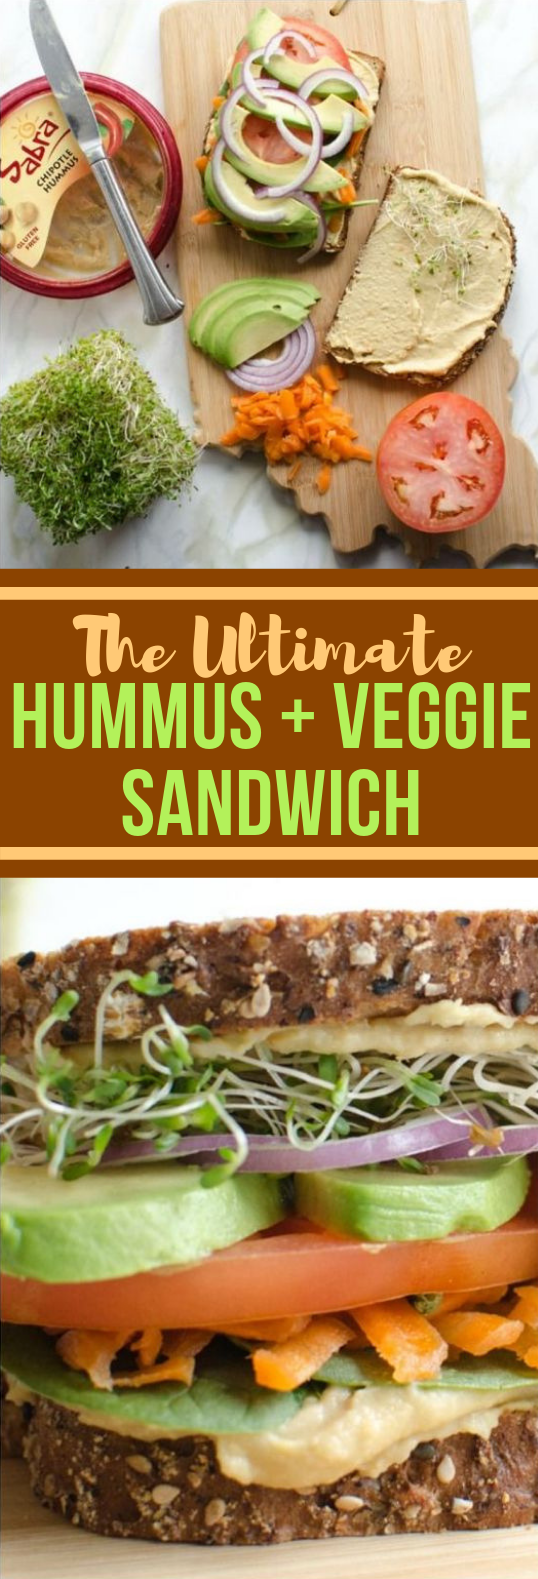 The Ultimate Hummus and Veggie Sandwich #Vegetarian #Healthyfood